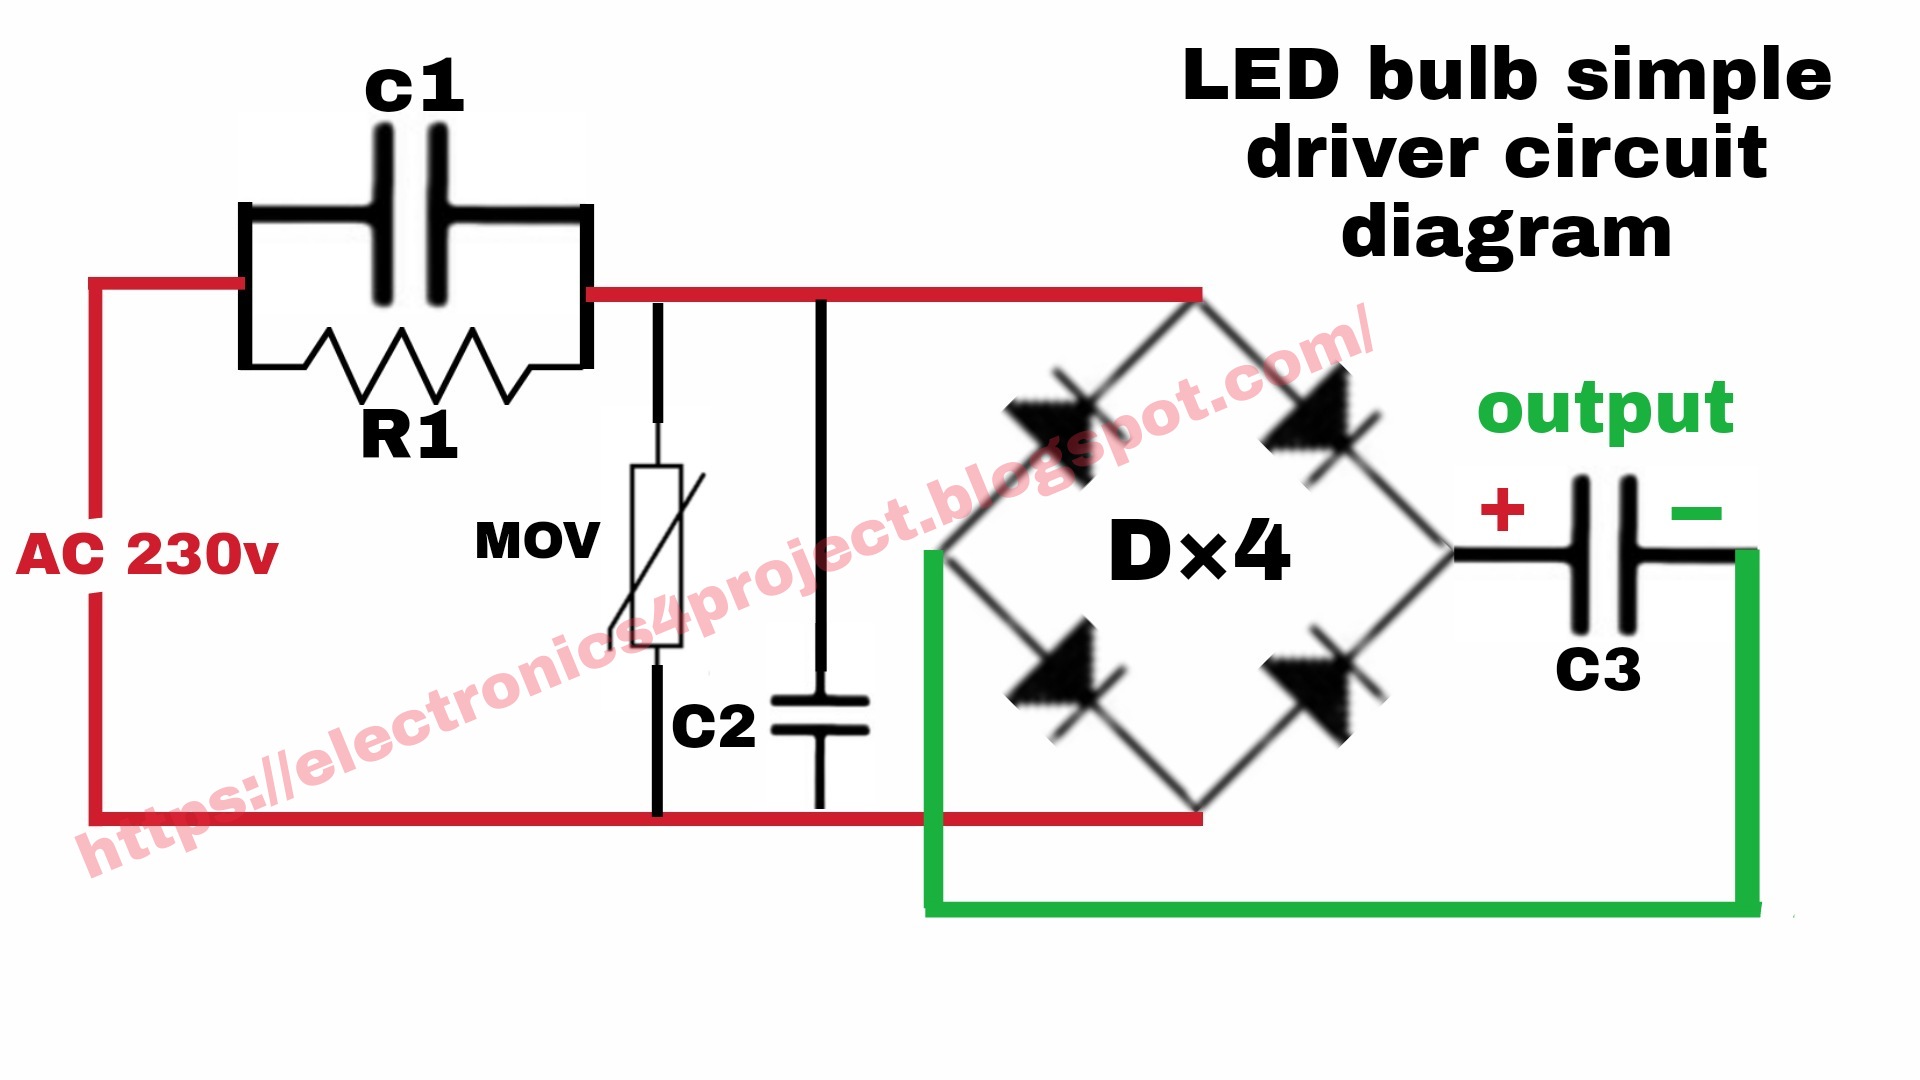 LED bulb simple driver circuit diagram